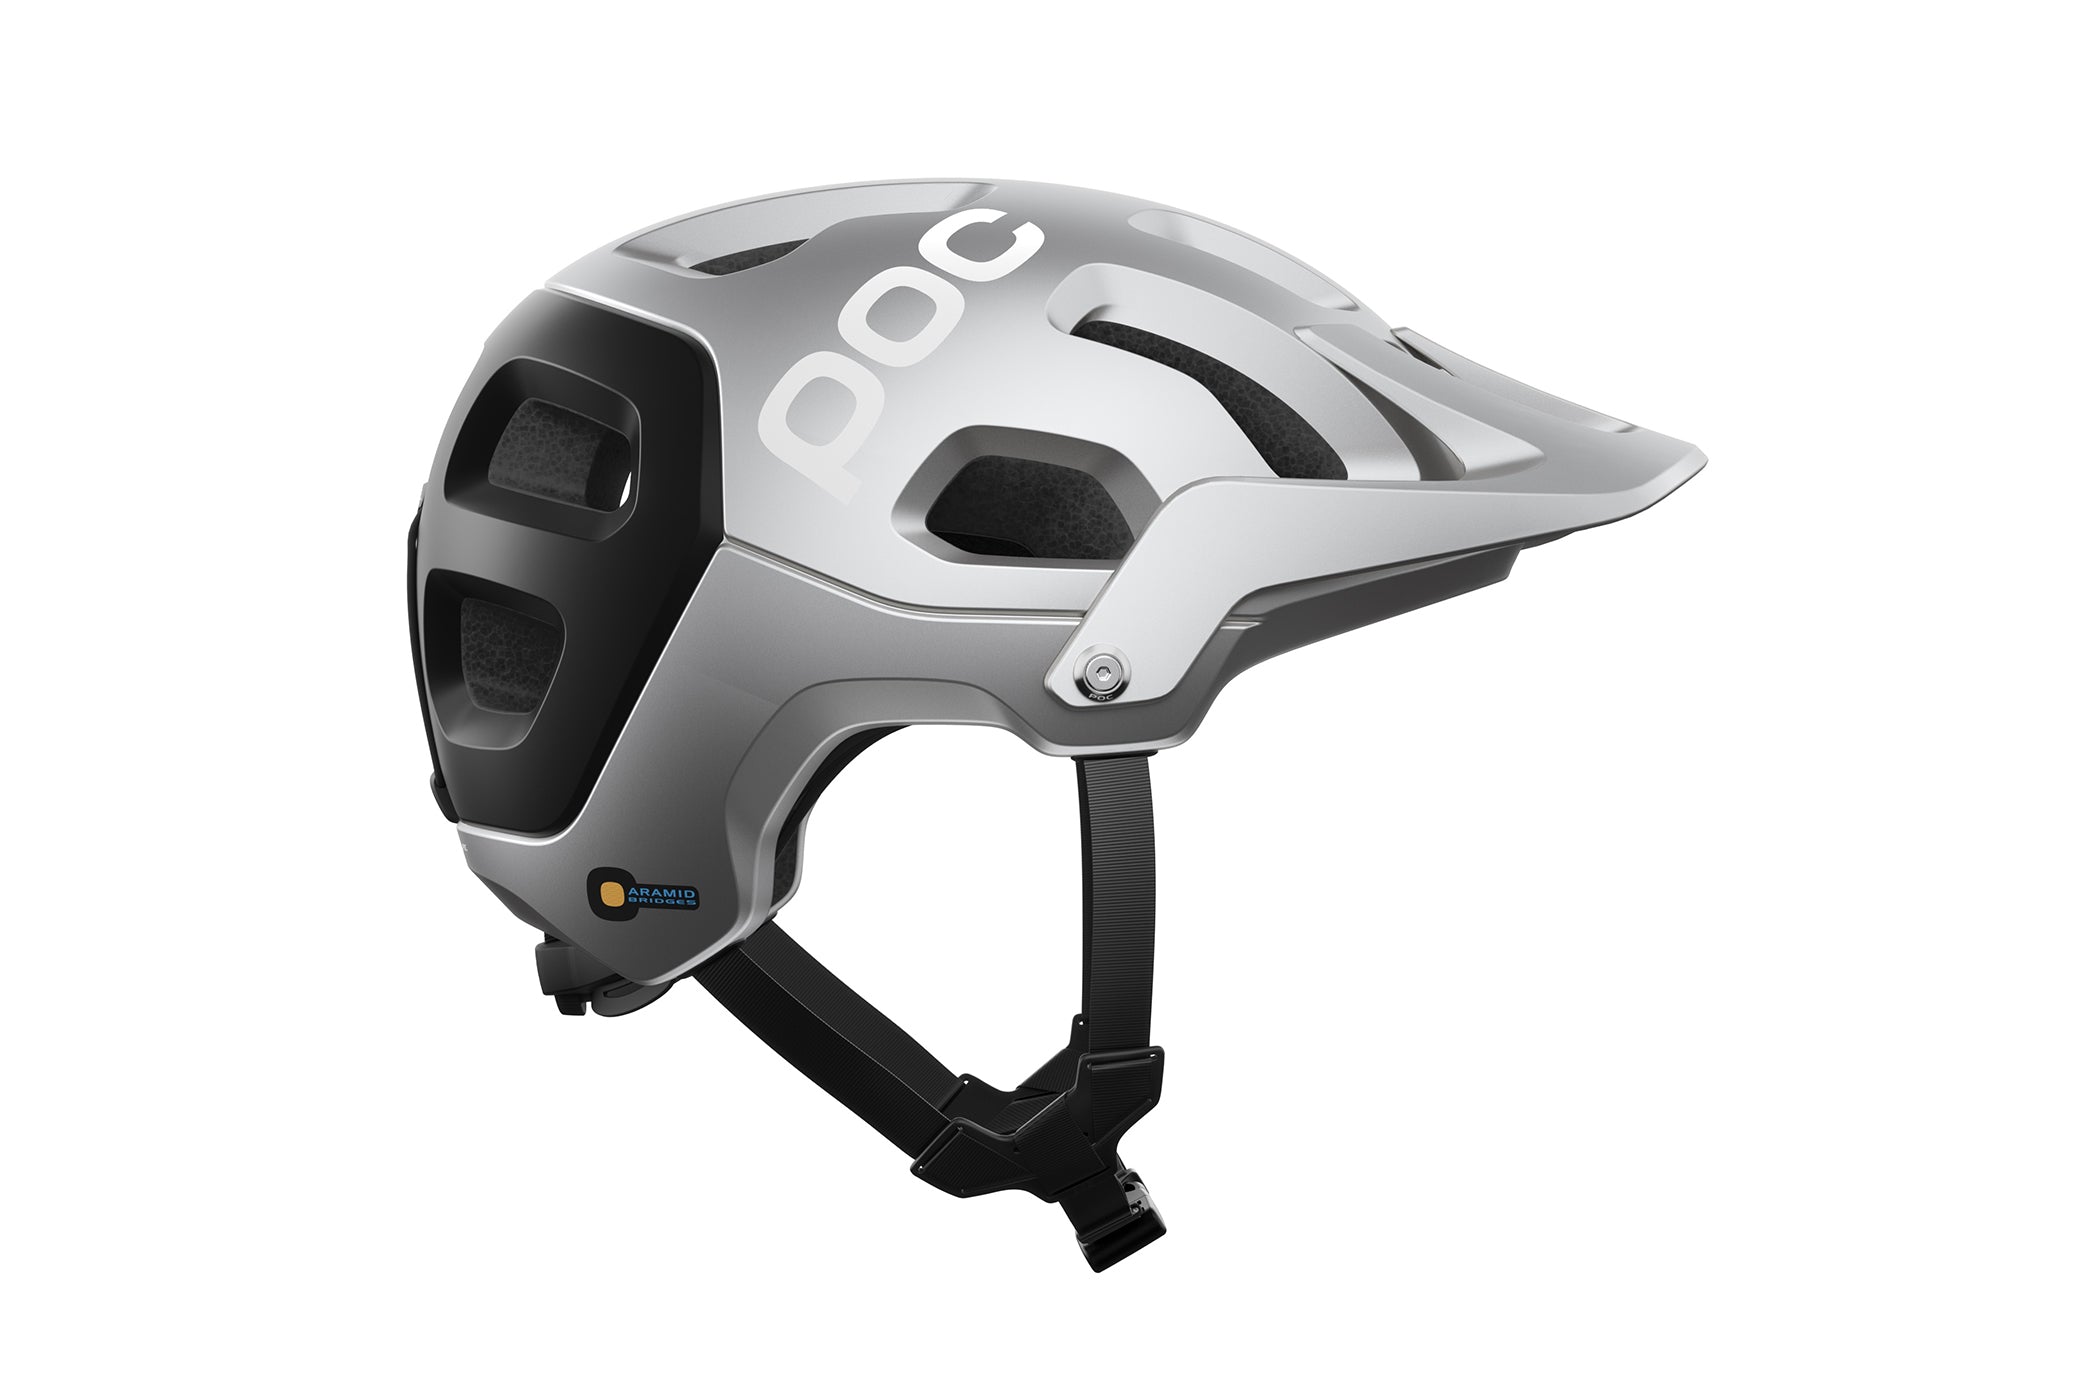 POC Tectal Race MIPS Bike Helmet